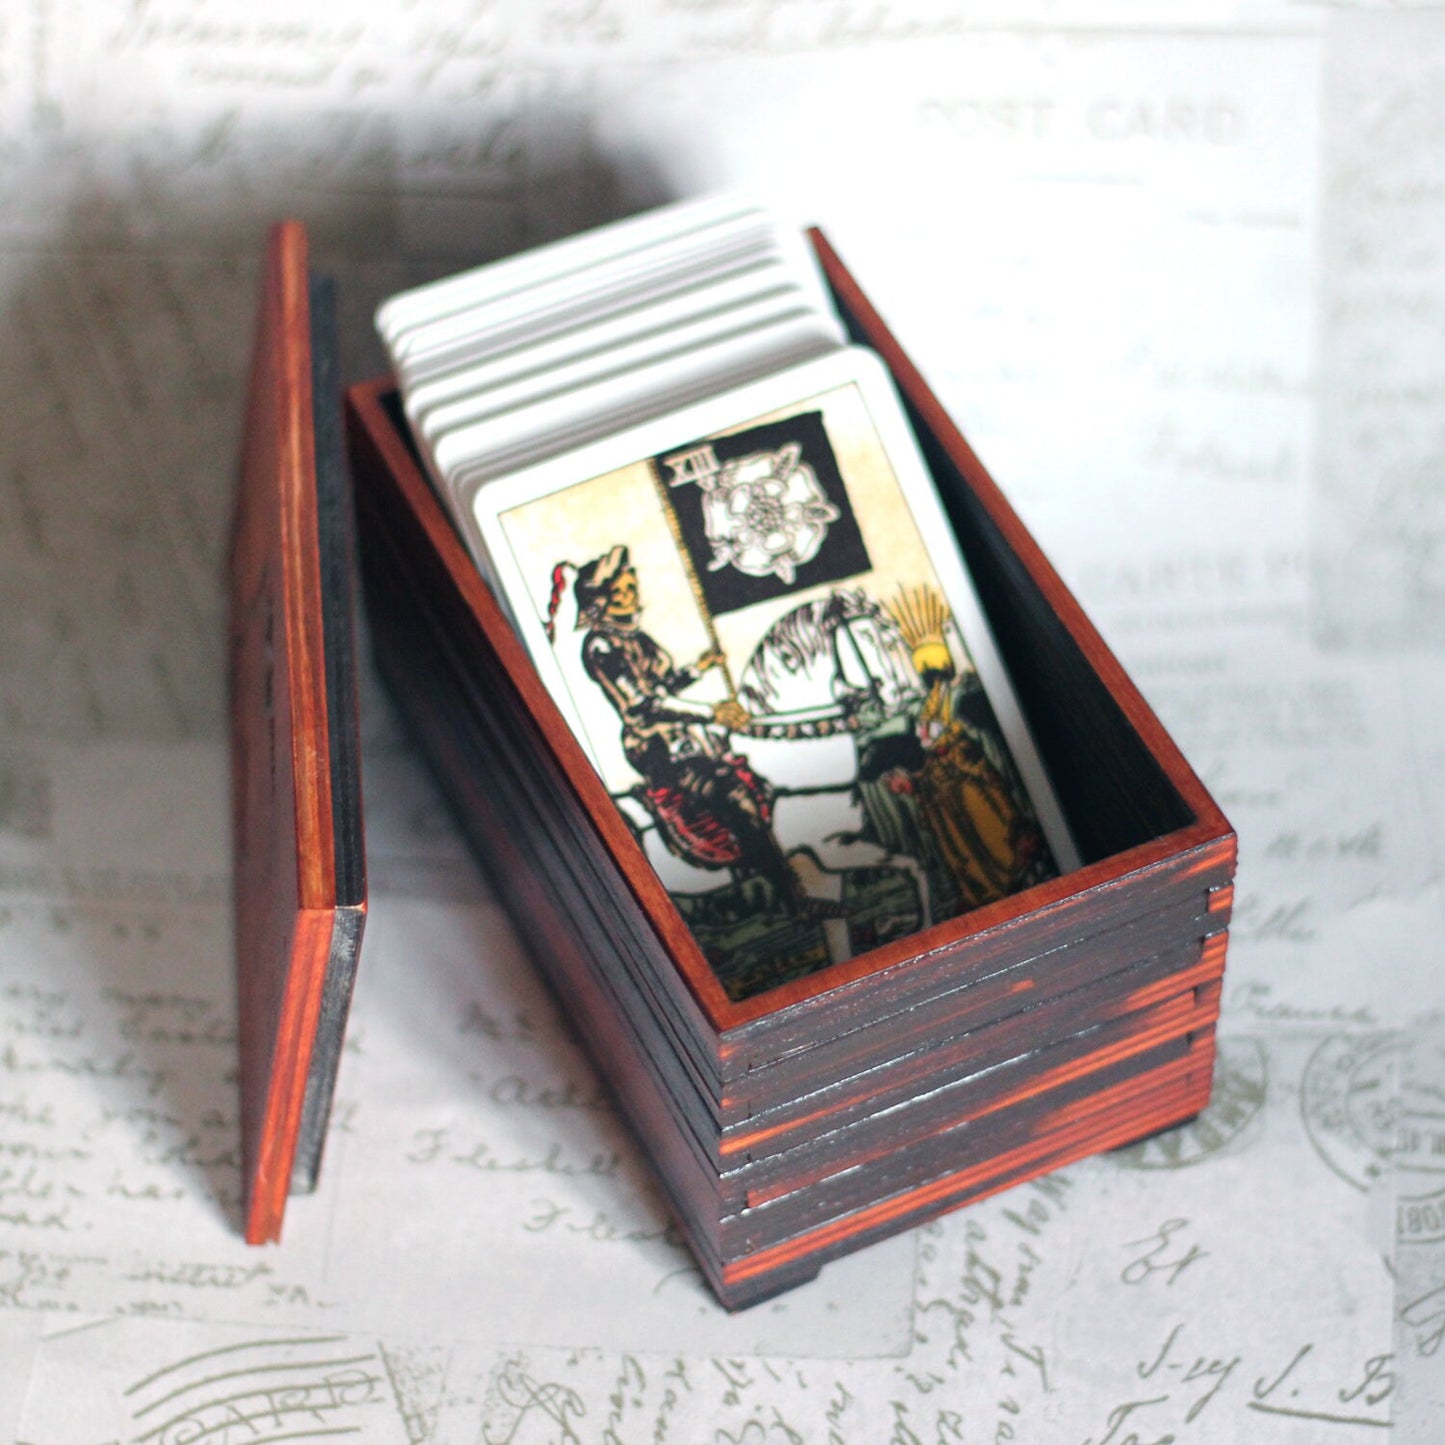 Wooden Tarot card box with death card design. A death card keepsake box for Tarot cards or jewellery box, custom Tarot deck for Wicca